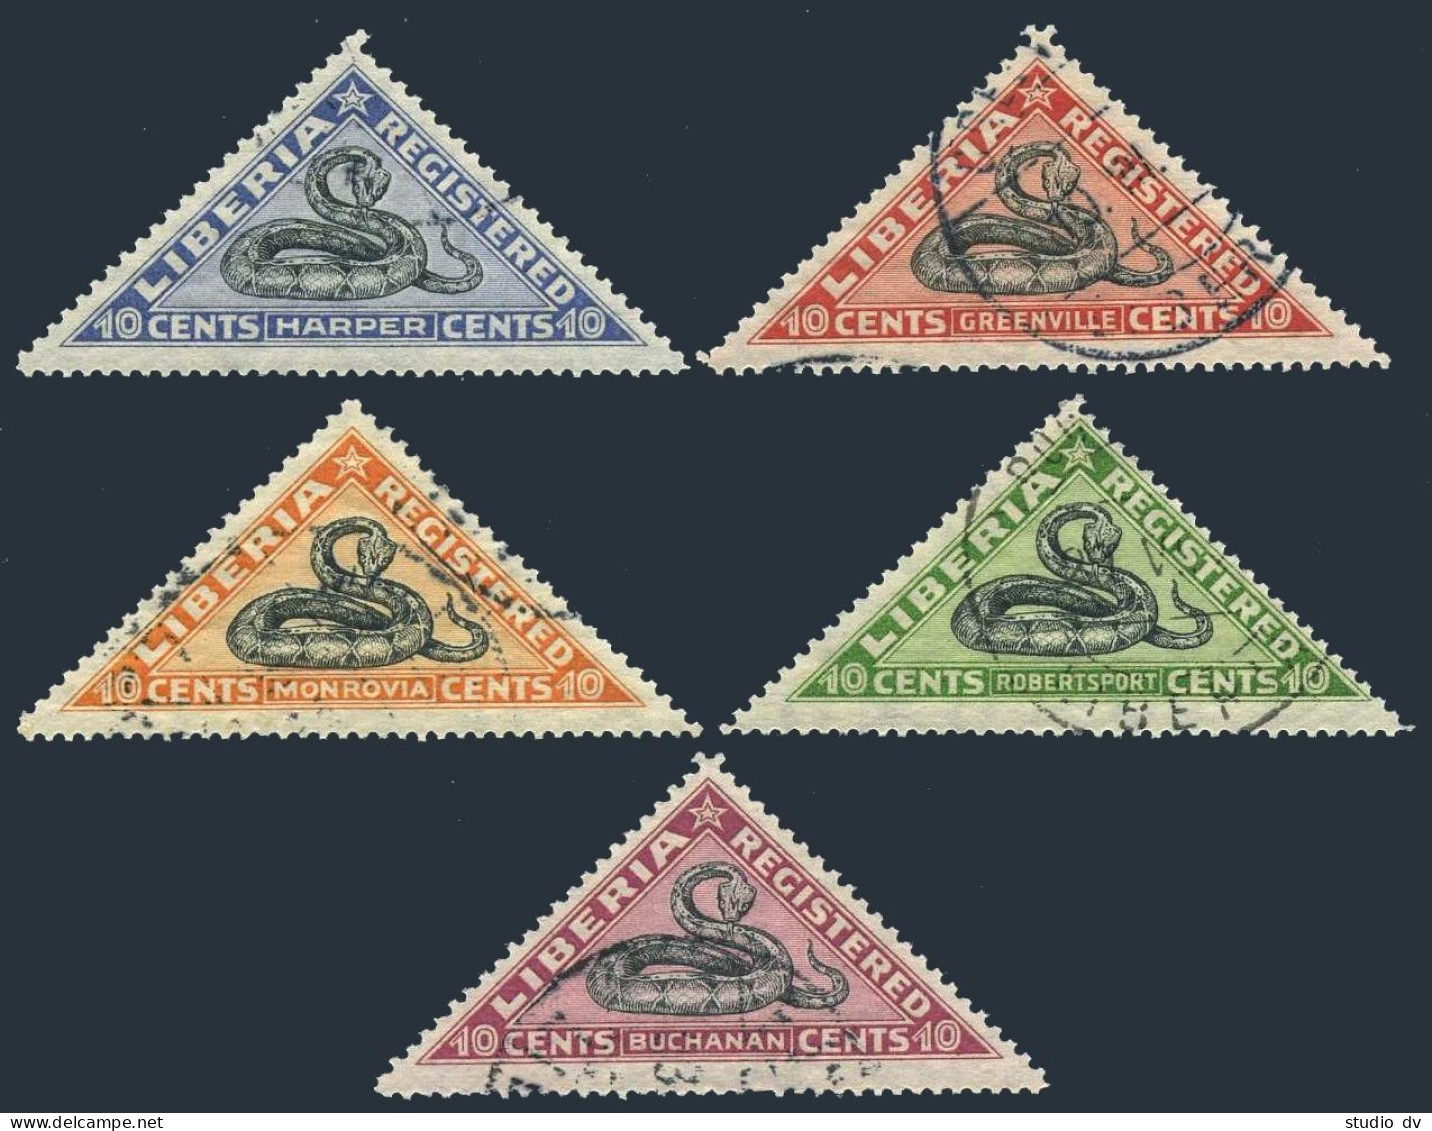 Liberia F20-F24,CTO.Michel 203-207. Registration Stamps,1921.Gabon Viper. - Liberia